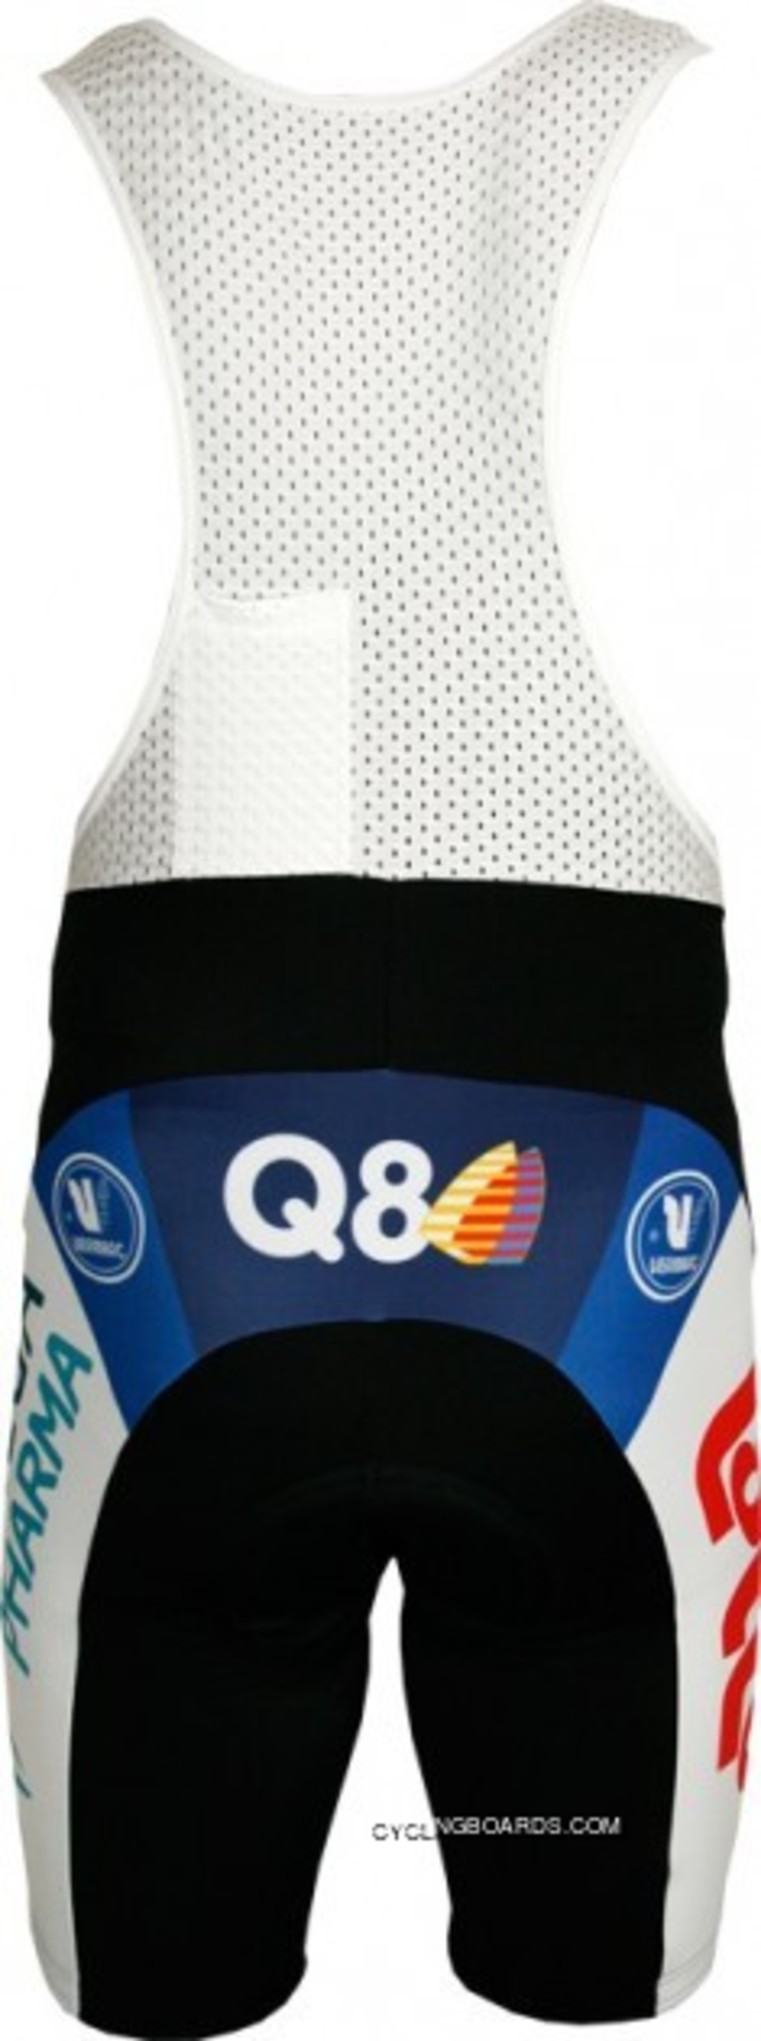 Omega Pharma-Lotto Finnischer Meister 2010-2011 Vermarc Radsport-Profi-Team Bib Shorts Coupon